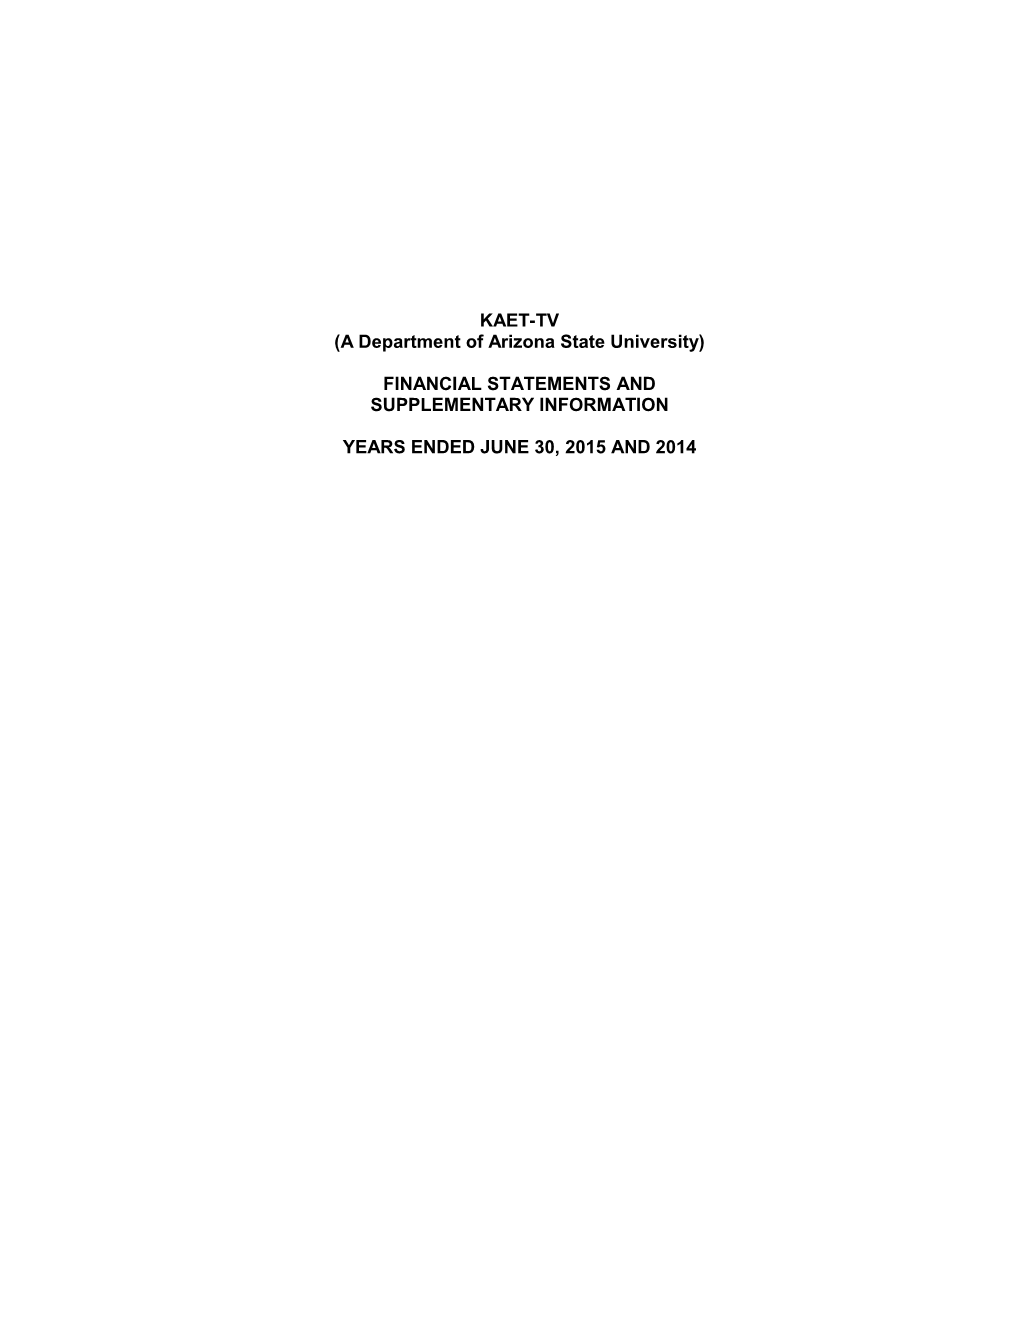 KAET 2014-2015 Financial Statement (PDF)